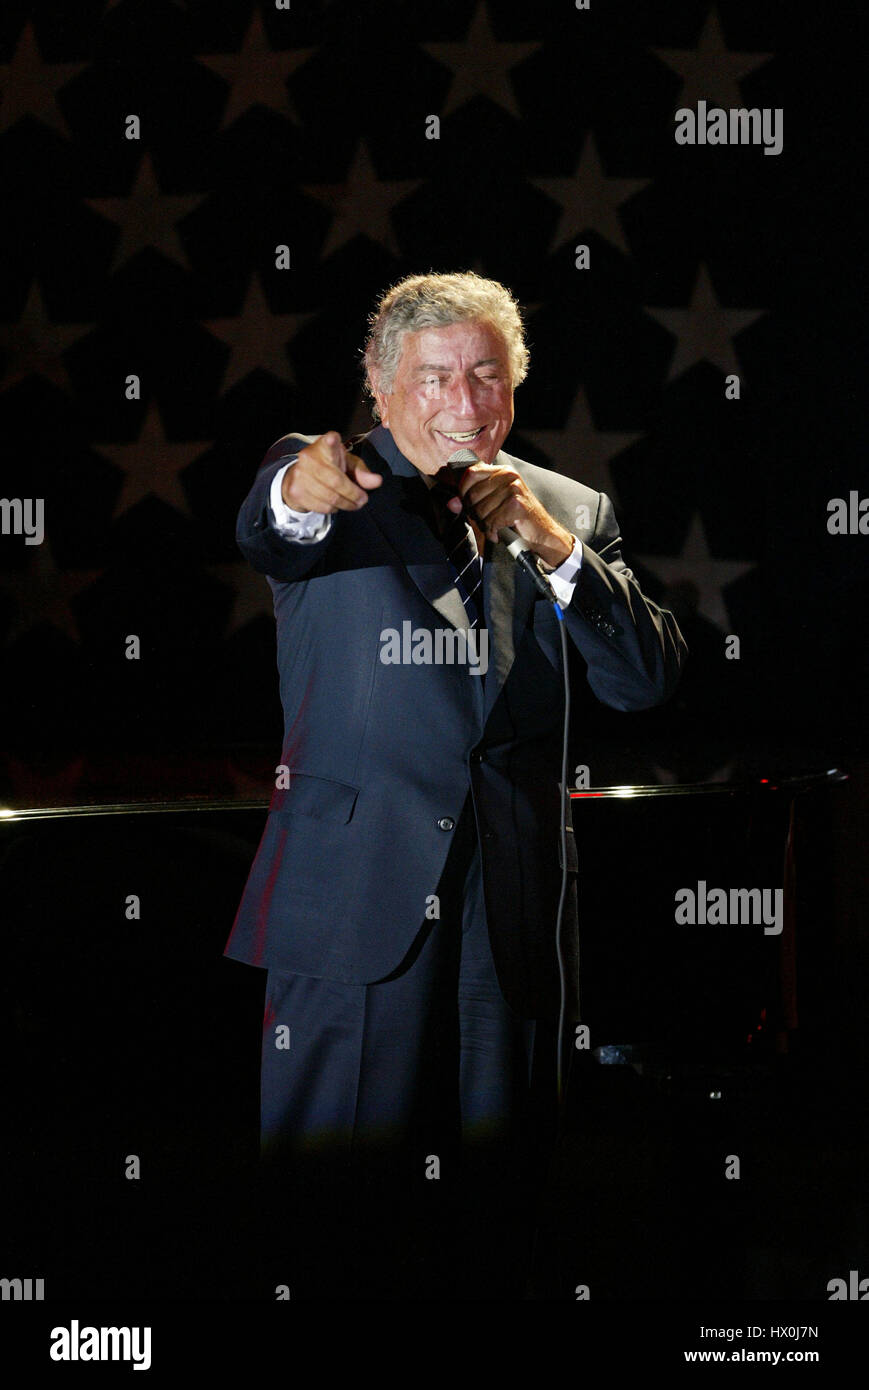 Singer Tony Bennett sings at a fund raiser for John Kerry  in Santa Monica, Calif.  on August 21, 2004. Photo credit: Francis Specker Stock Photo